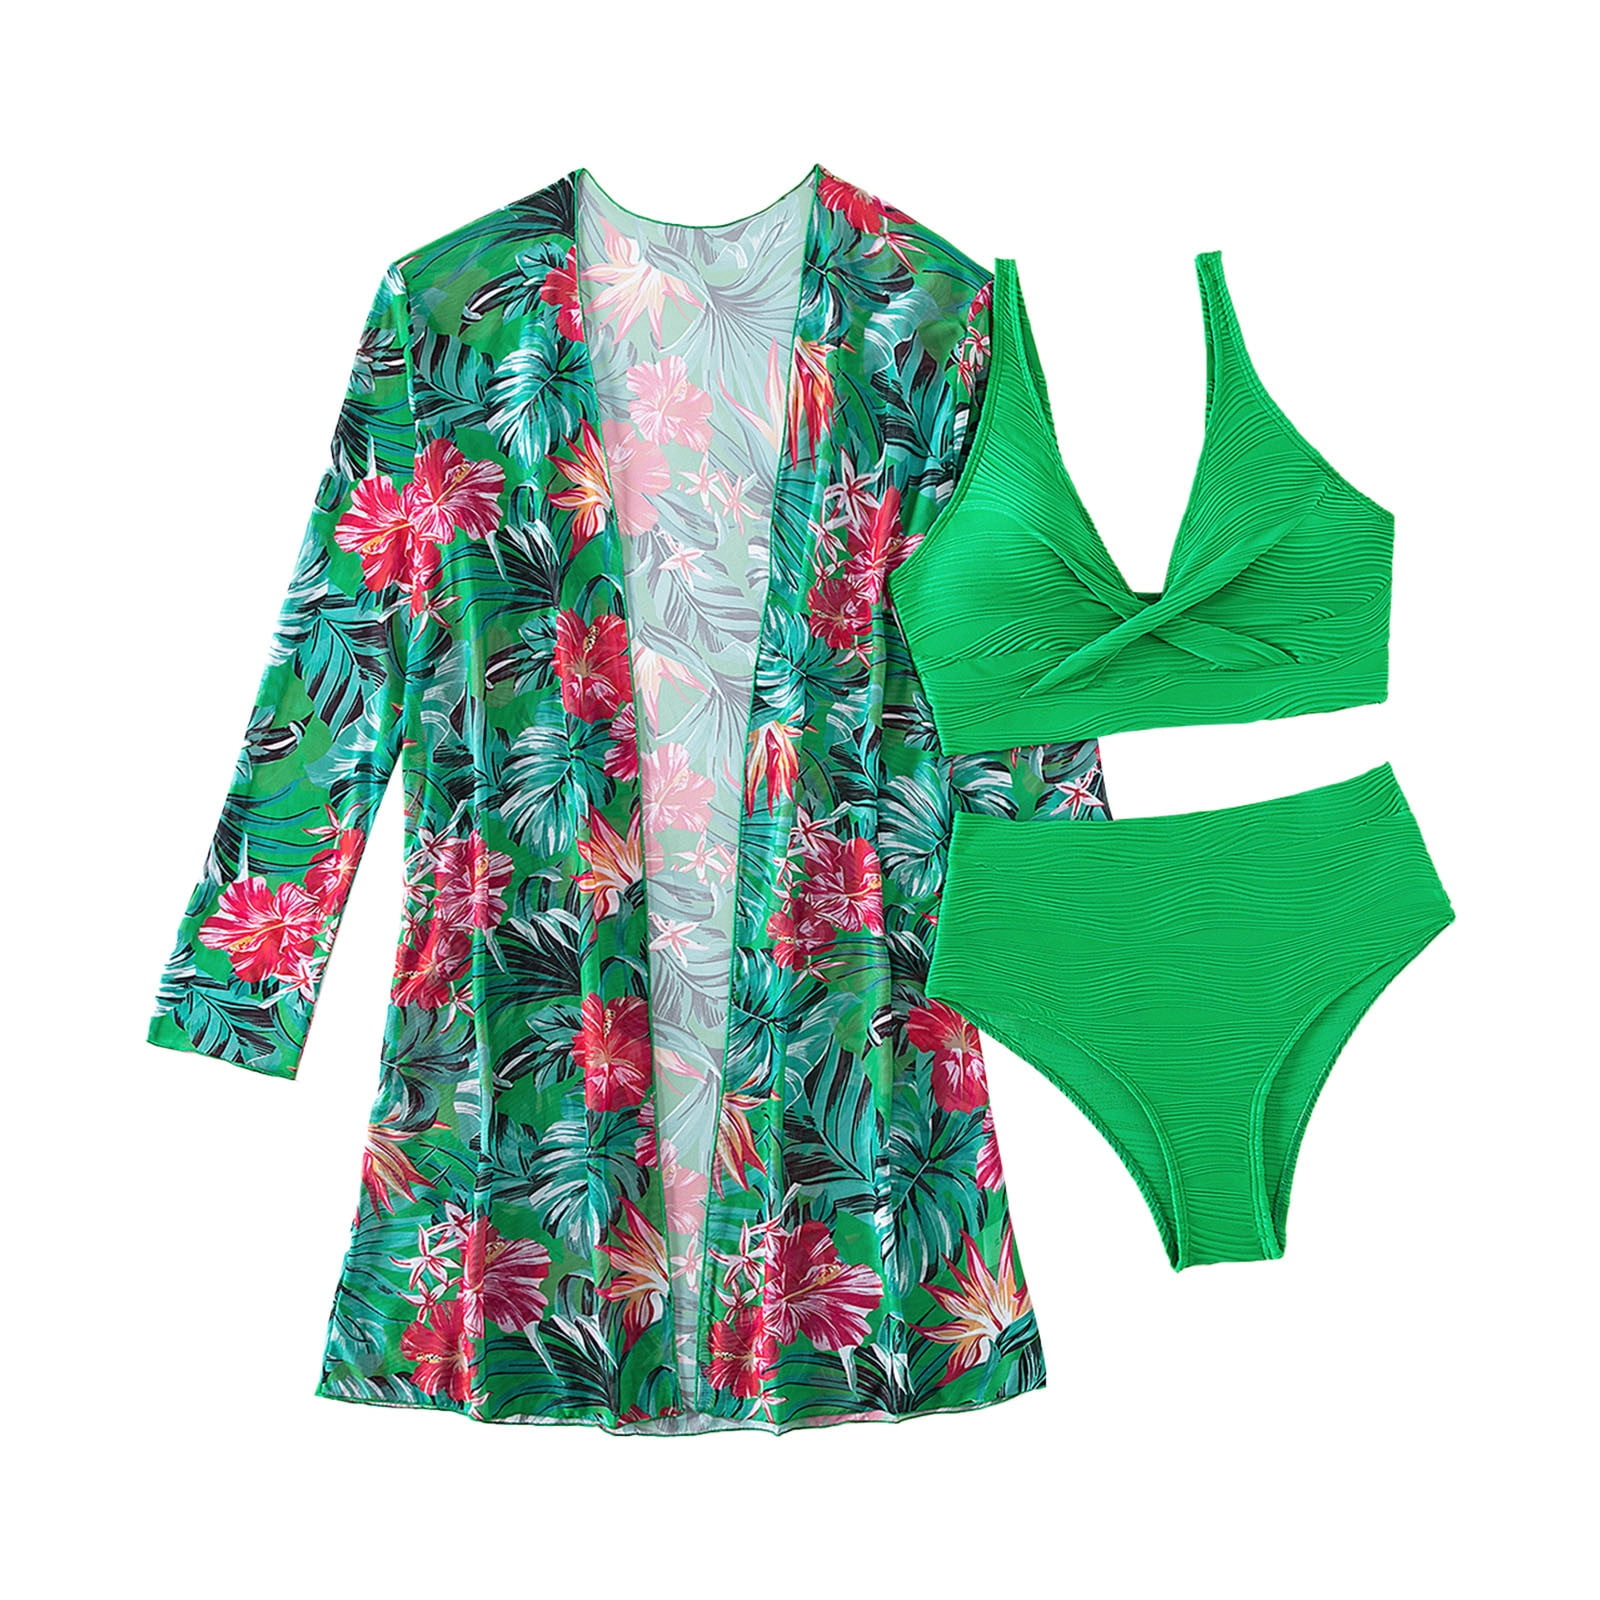 Beugl Two Piece Swimsuit for Women, Women's Multi Color 3 Piece ...